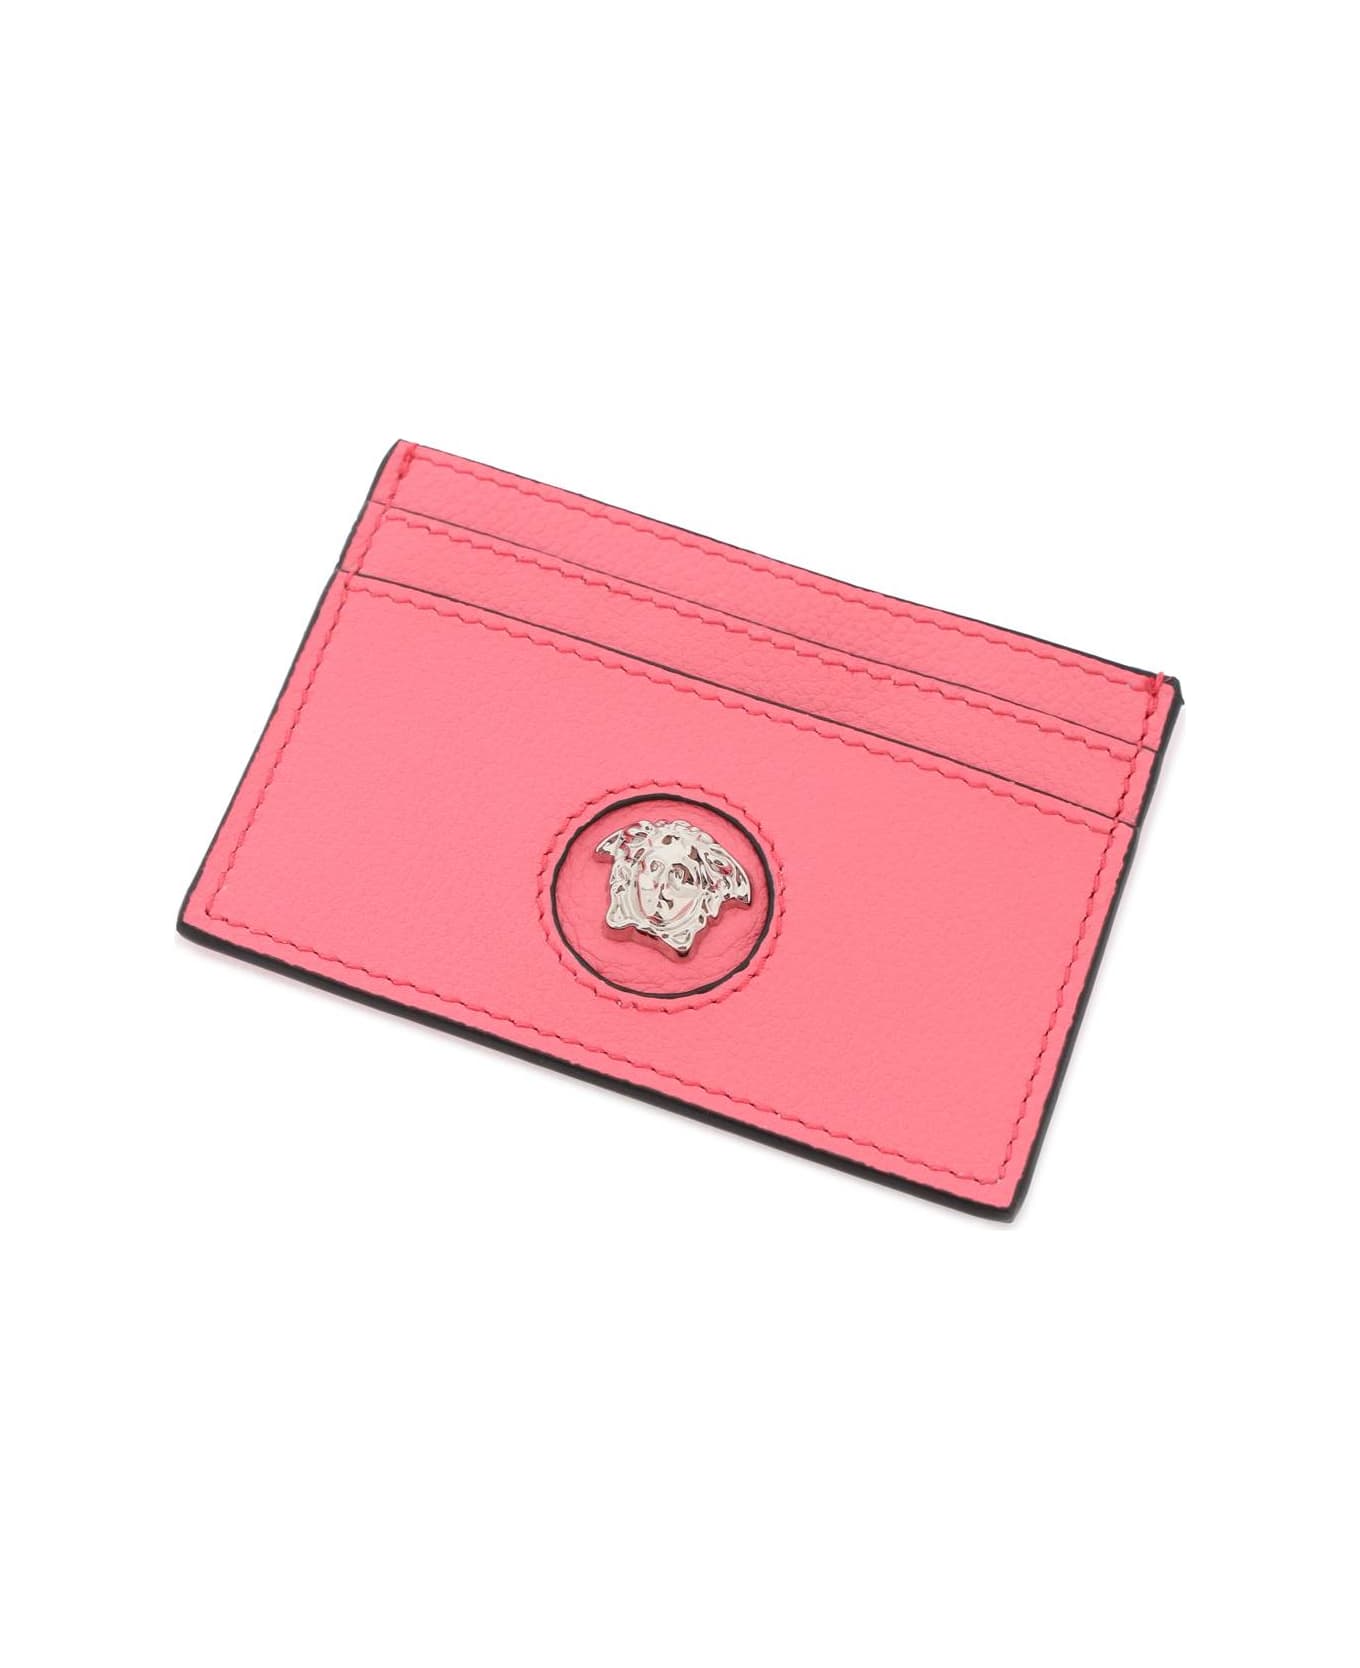 Versace Jellyfish Card Holder - Flamingo/palladio